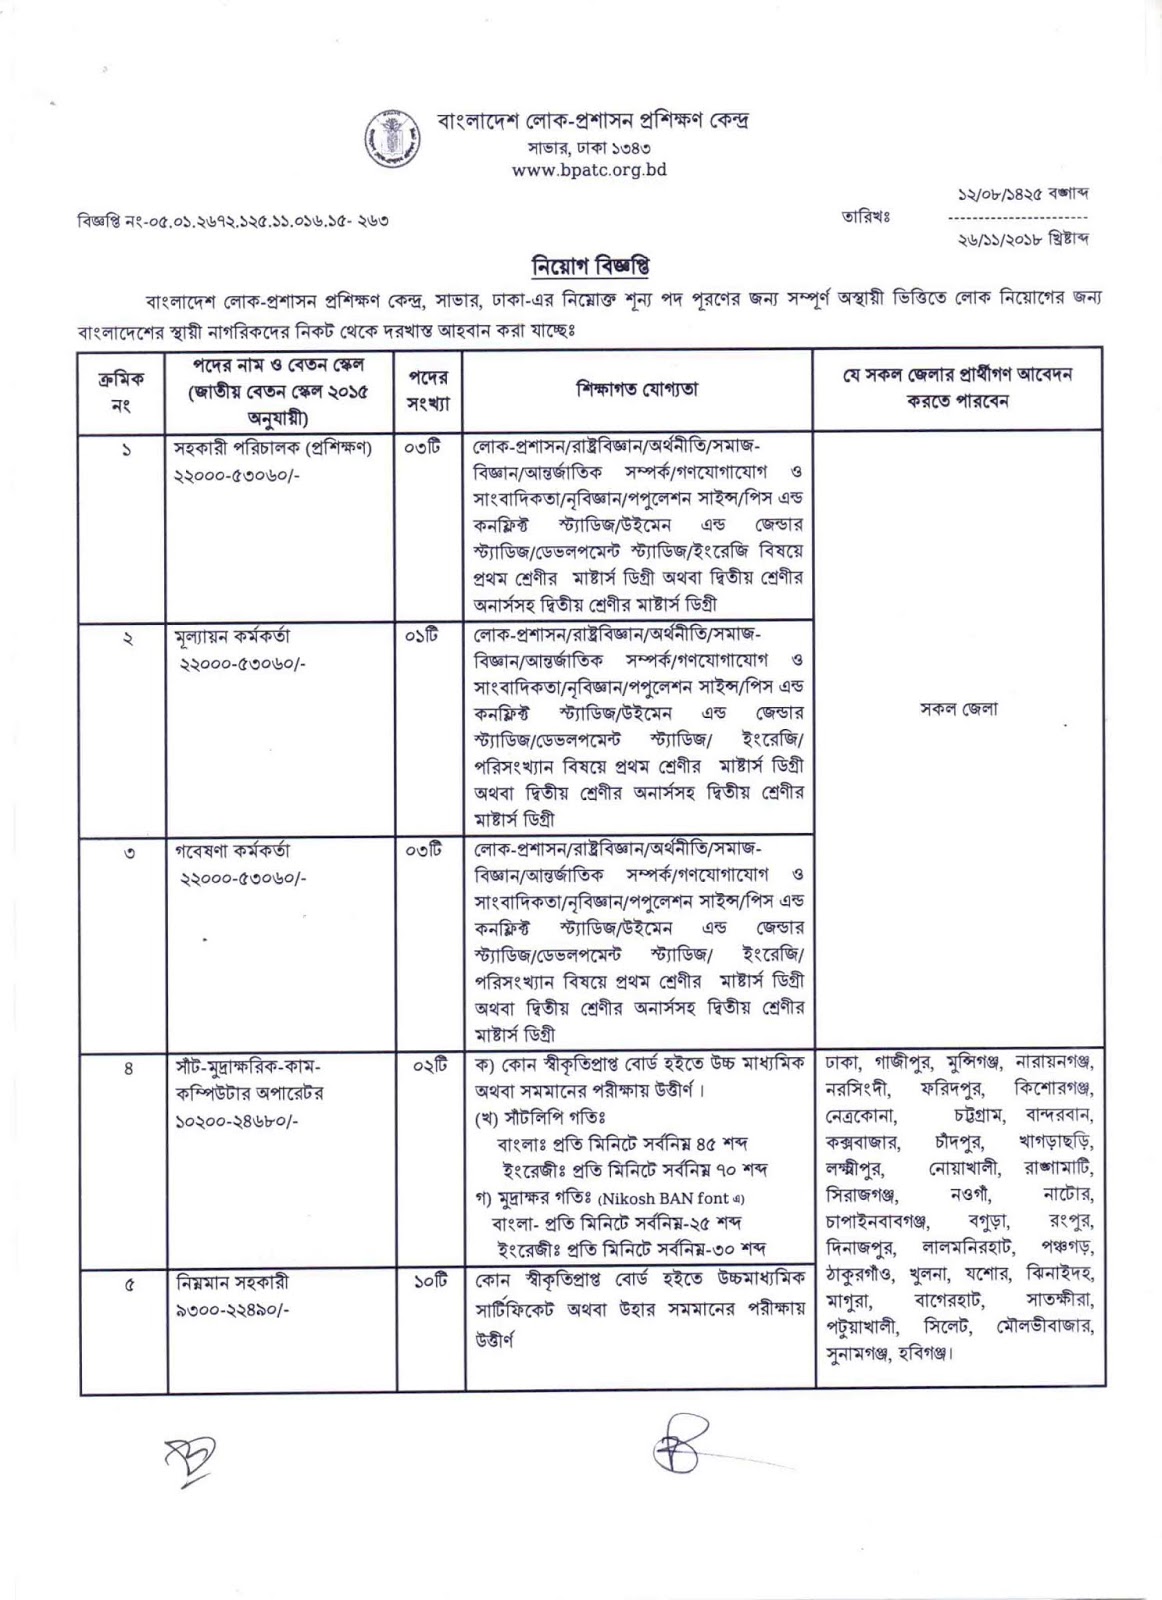 Bangladesh Public Administration Training Centre (BPATC) Job Circular 2018 